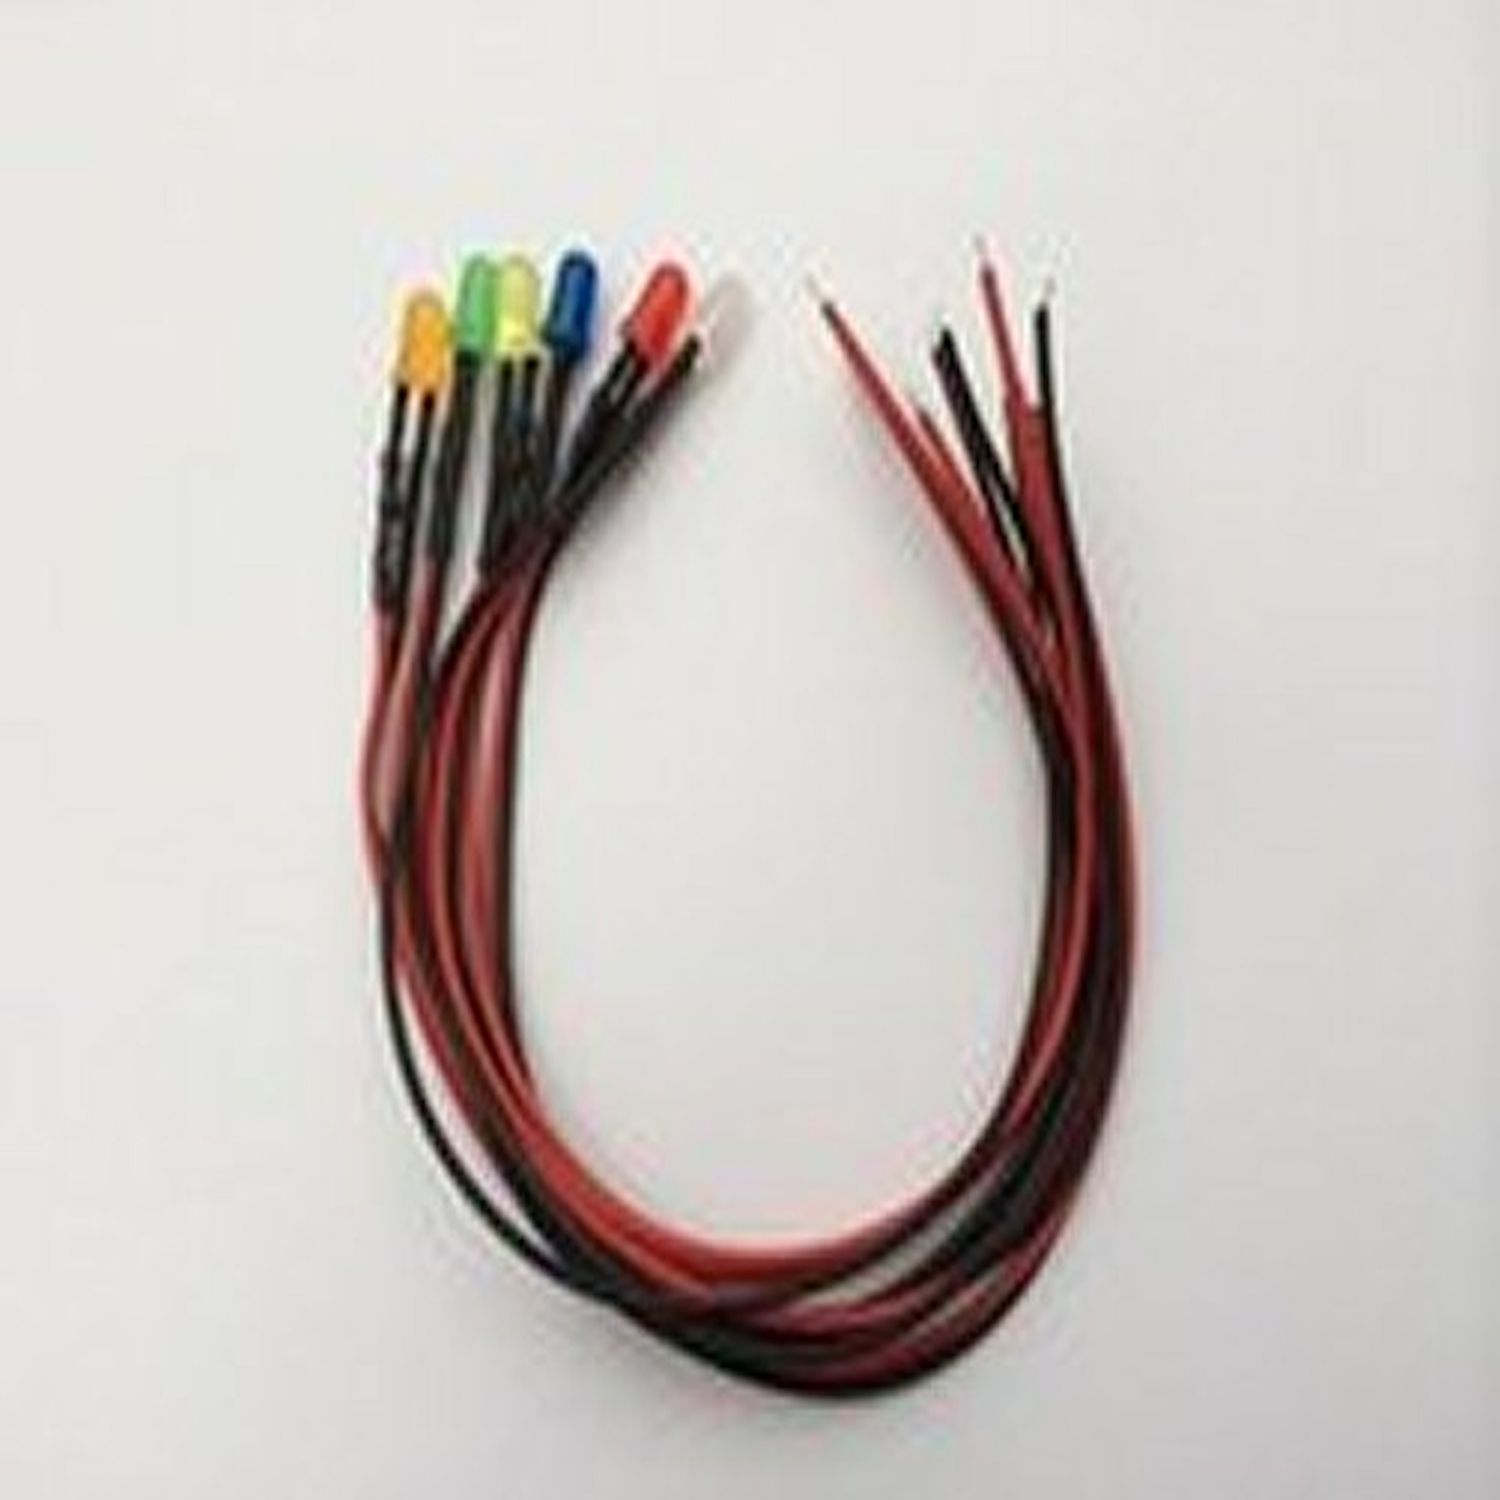 3mm Prewired  LEDs - 12 volt DC (Red)